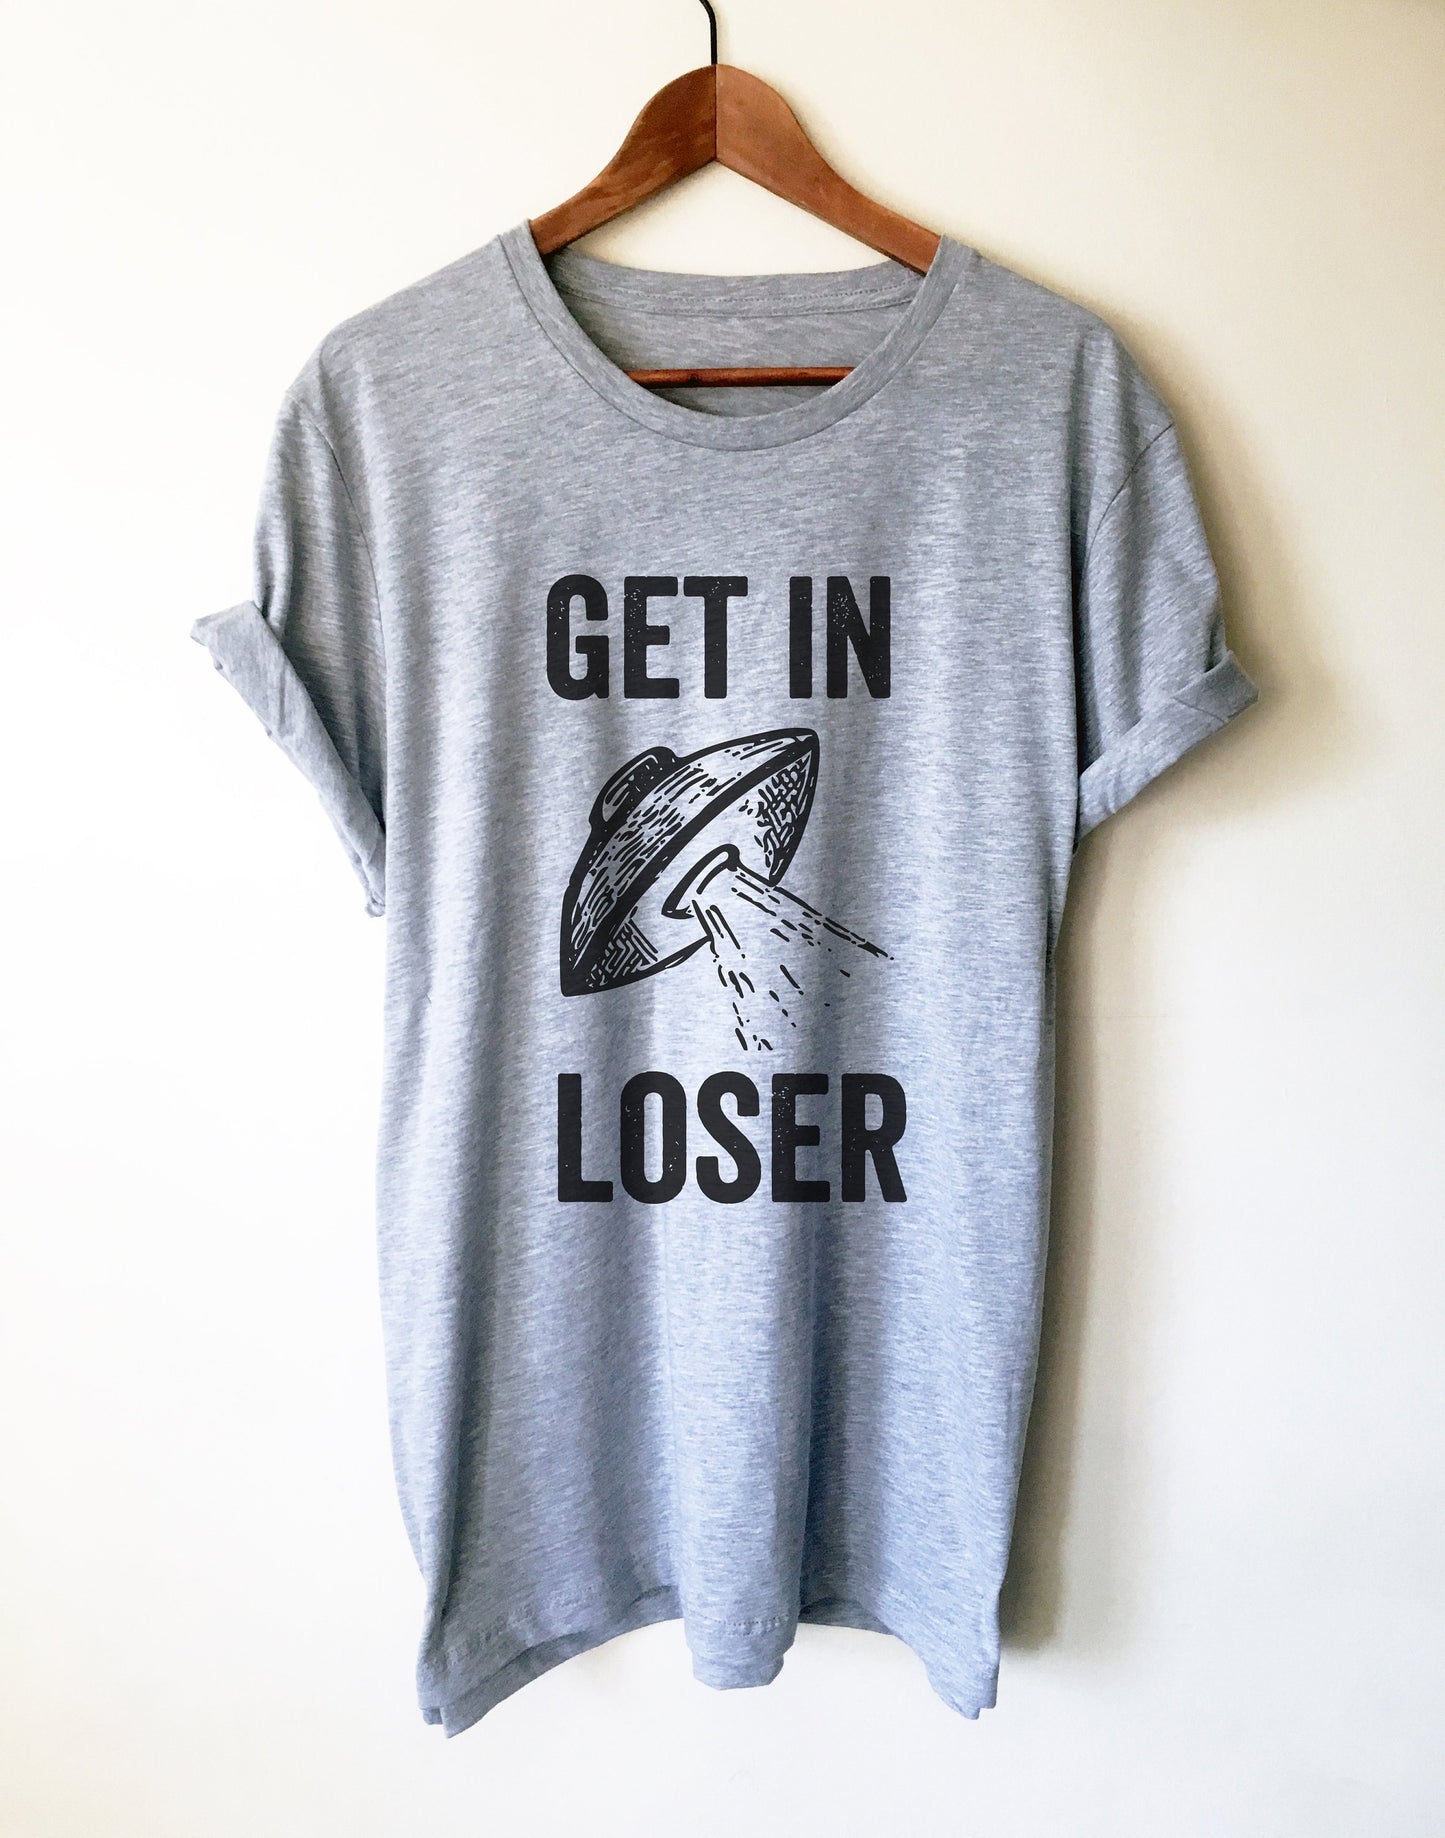 Get In Loser Unisex Shirt - Alien Shirt, Alien Gift, Space Shirt, Space Gift, UFO Shirt, Alien T Shirt, Outer Space, UFO Gift, Alien T Shirt